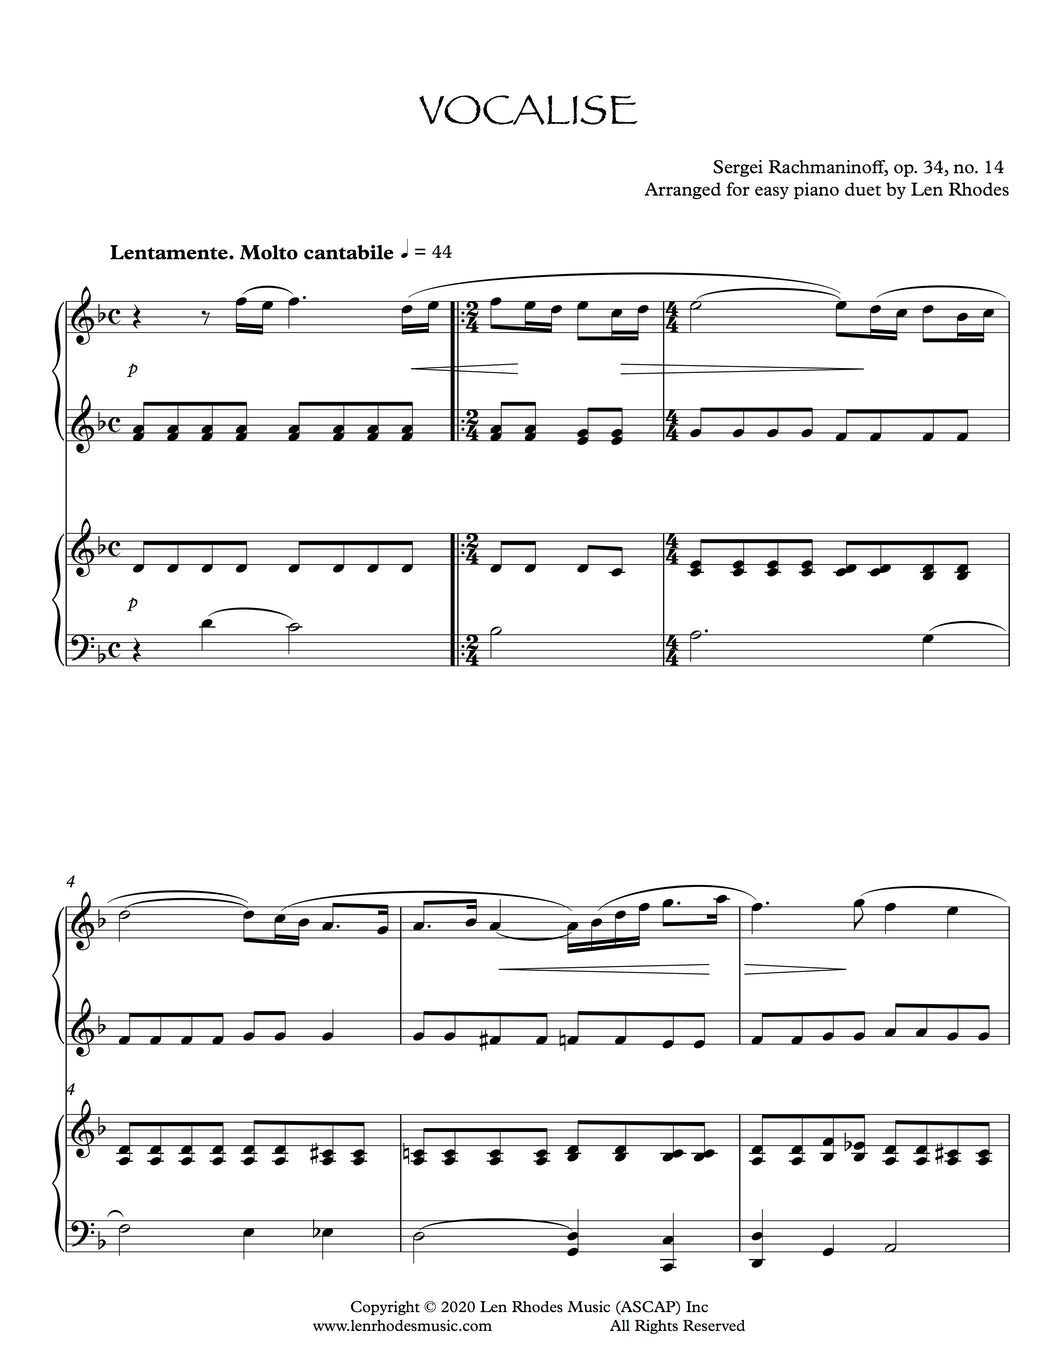 Vocalise, Rachmaninoff - easy Piano duet